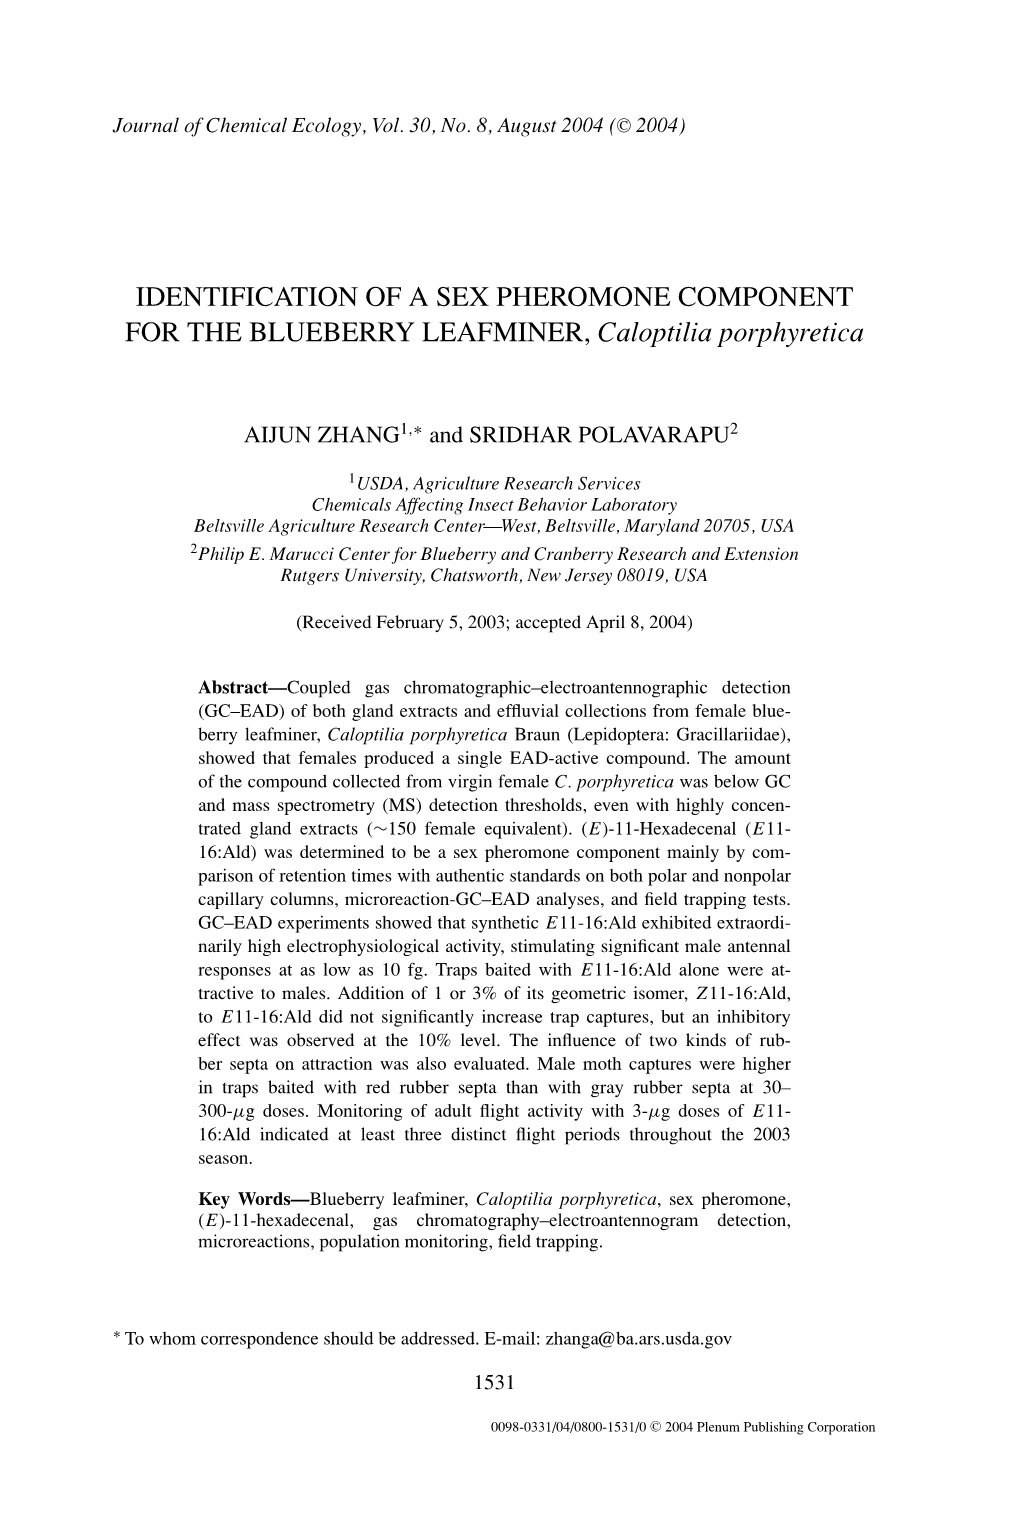 IDENTIFICATION of a SEX PHEROMONE COMPONENT for the BLUEBERRY LEAFMINER, Caloptilia Porphyretica